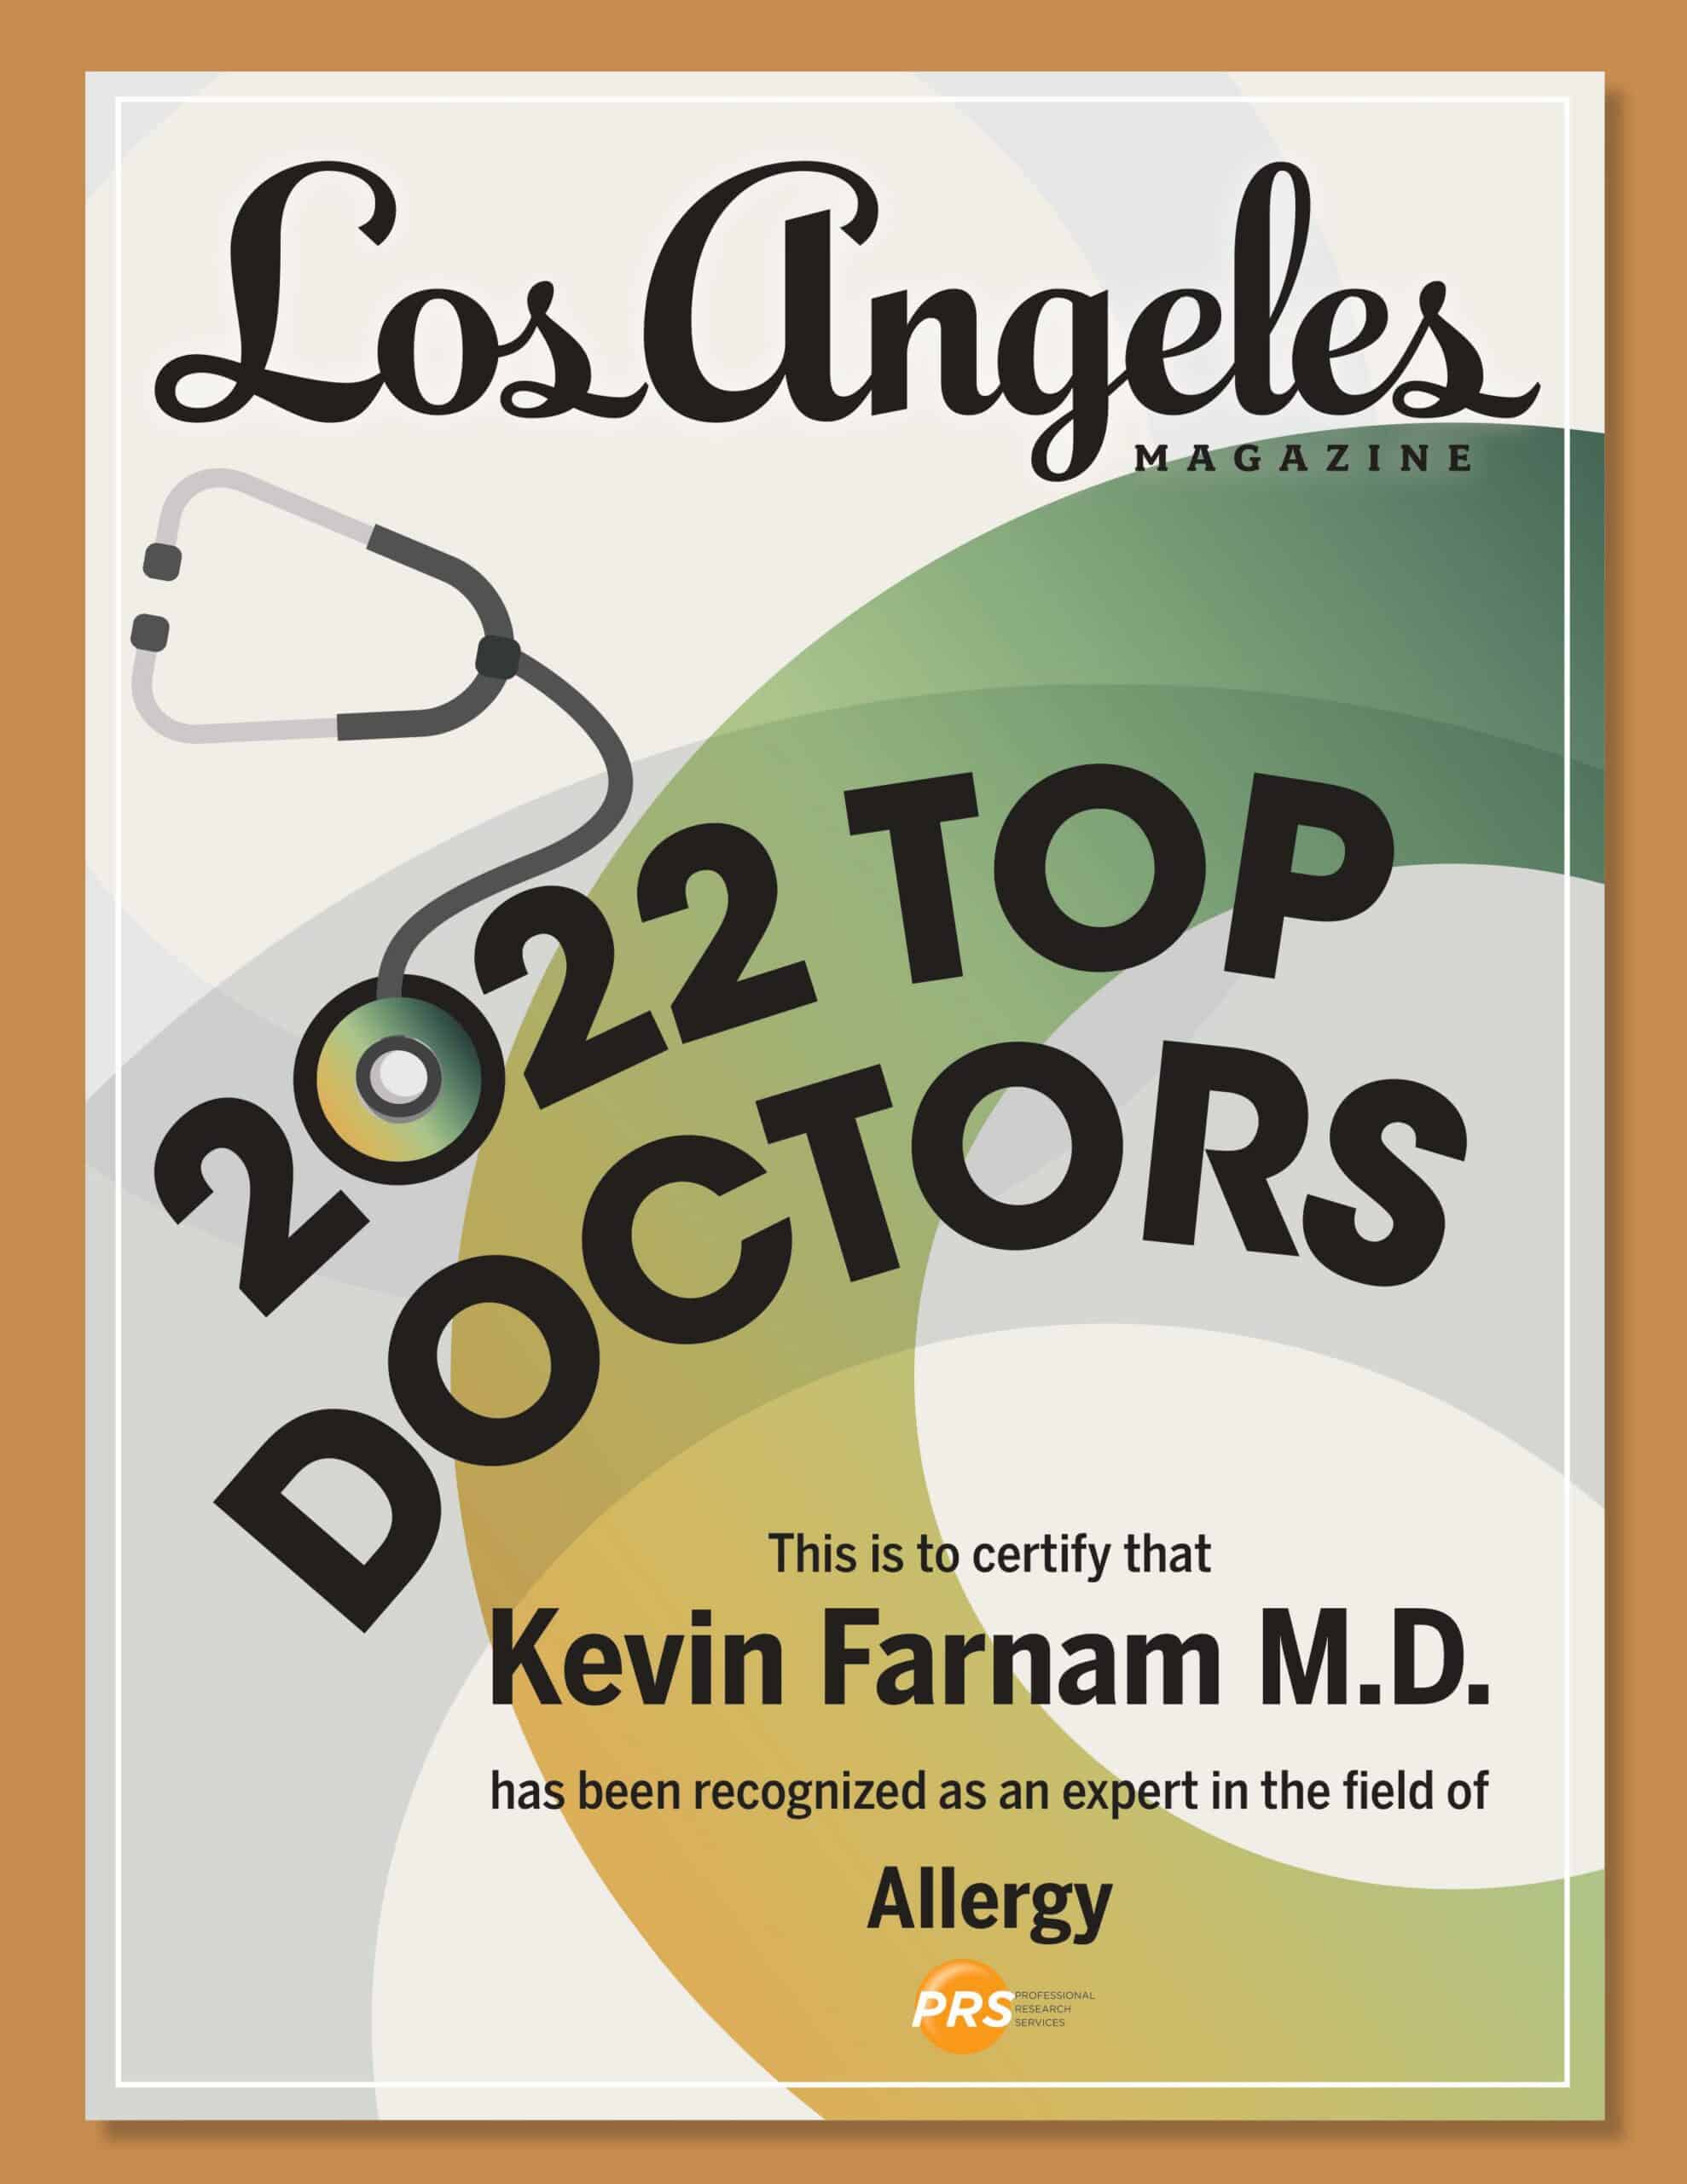 Los Angeles Magazine Top Doctor 2022